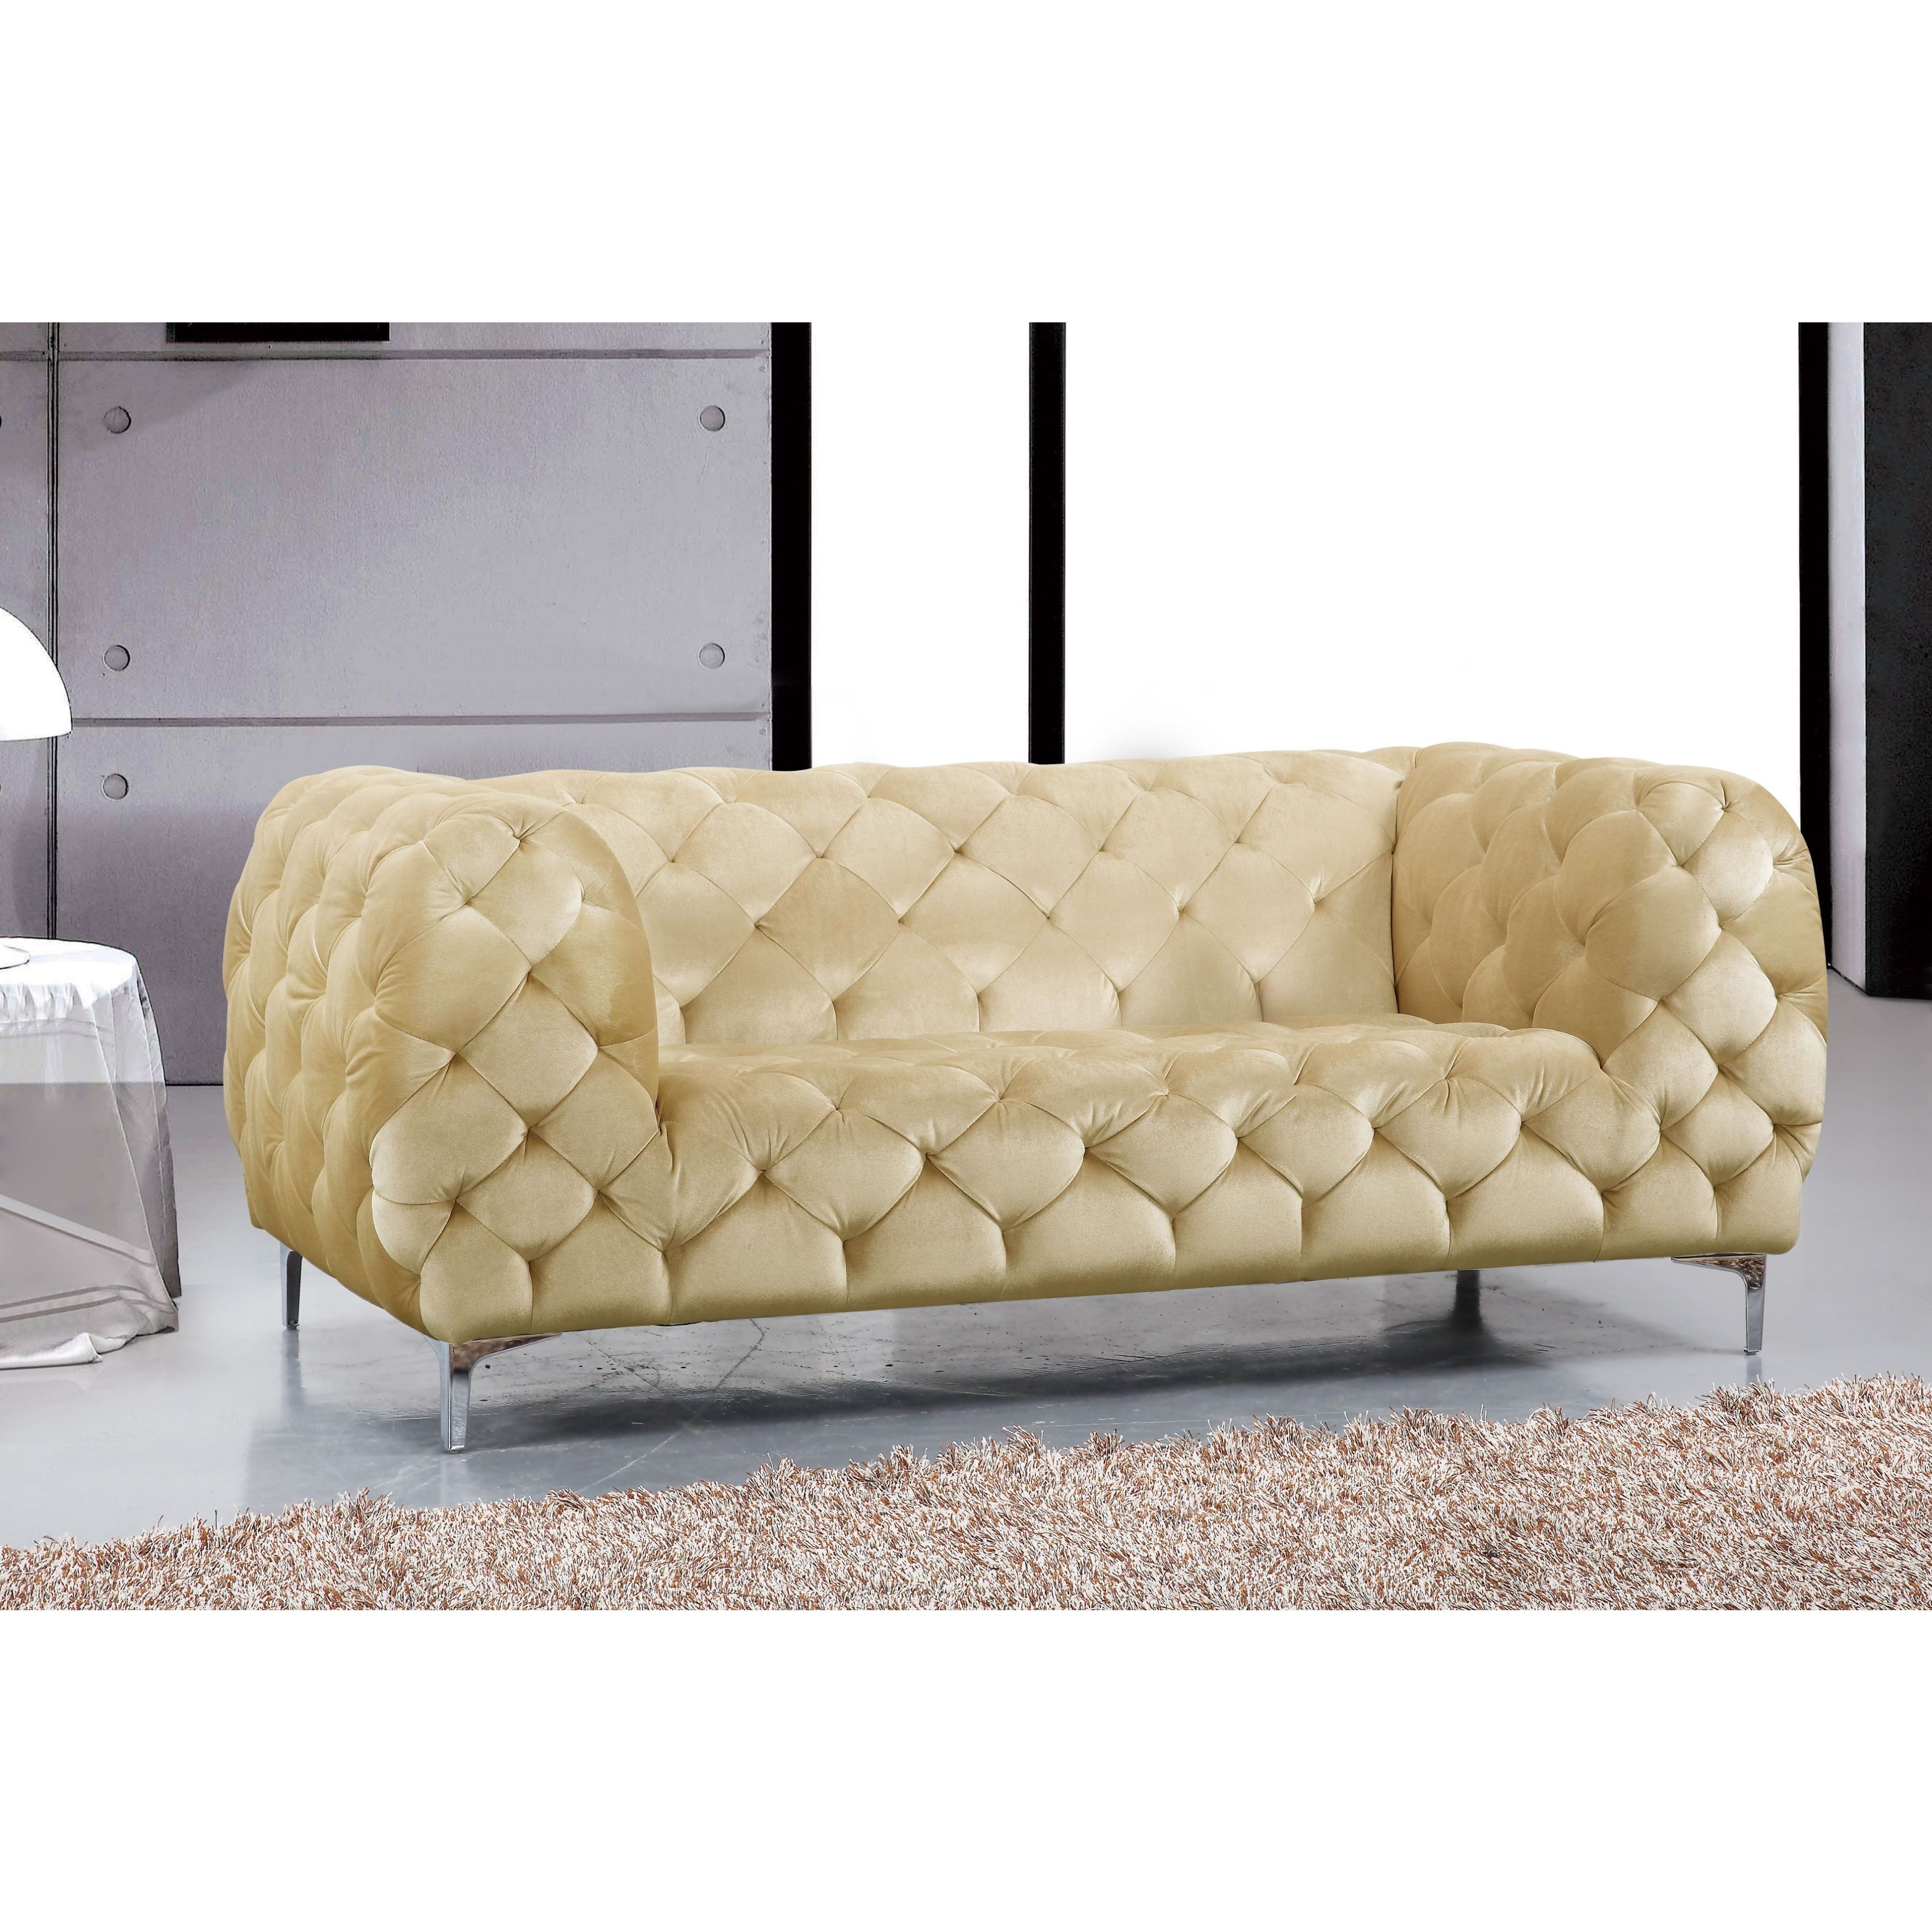 Mercer Foam Oversized Sofa Chairs Pertaining To 2018 Shop Meridian Mercer Beige Velvet 4 Piece Furniture Set – Free (View 8 of 20)